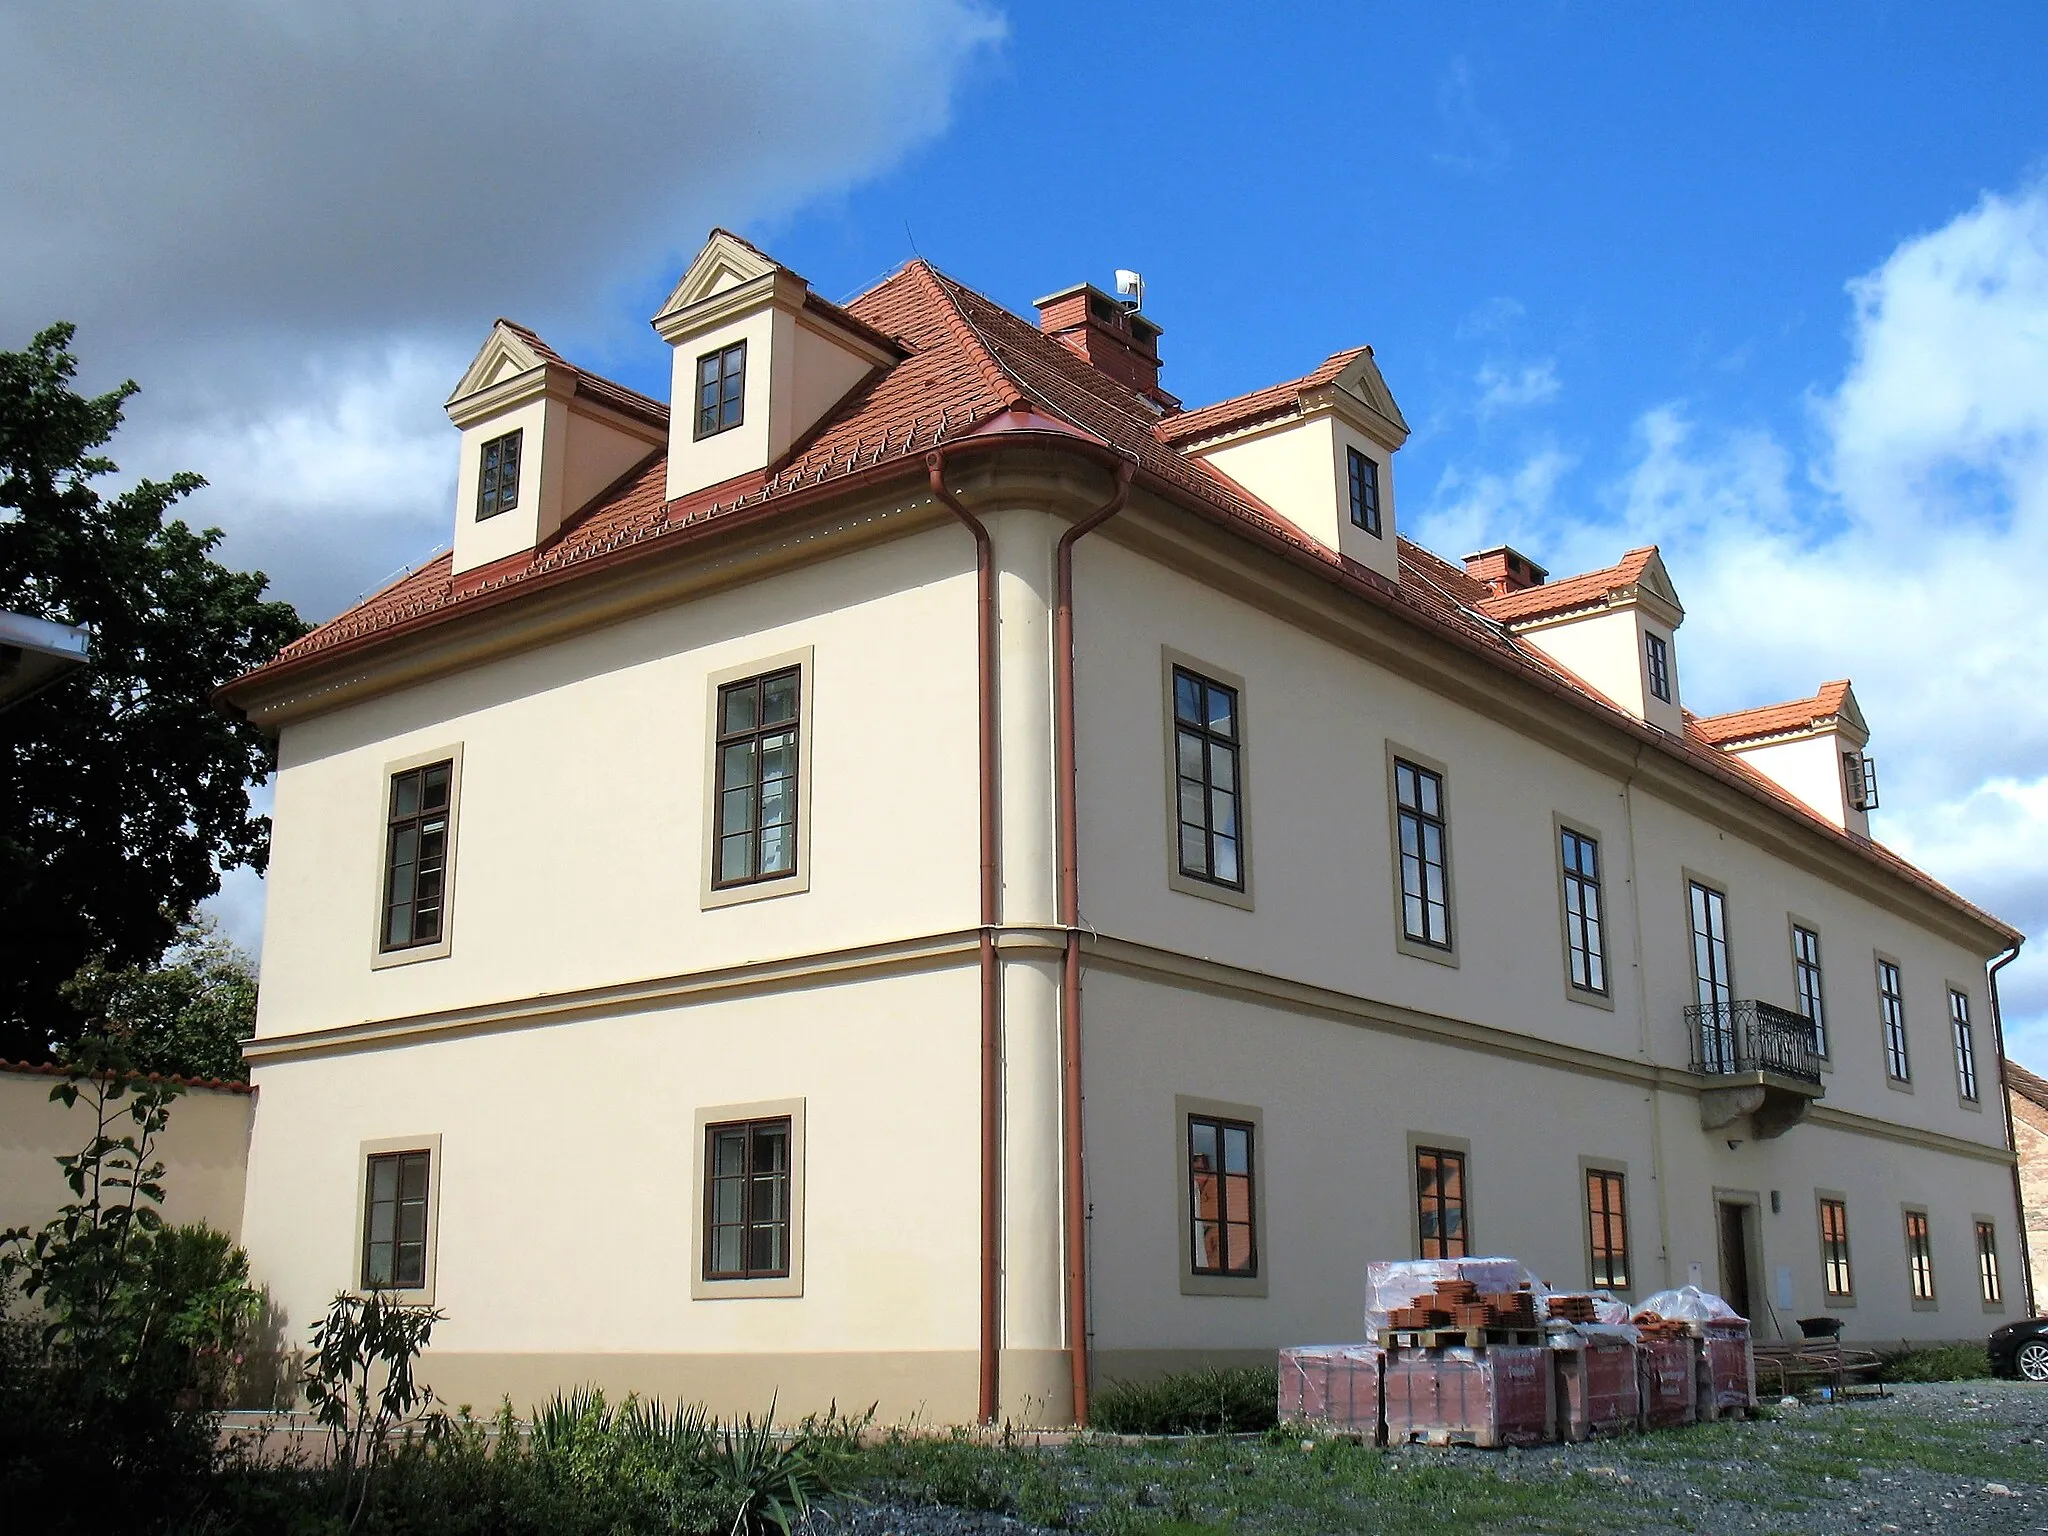 Photo showing: Castle in farmyard Drasty, cultural monument near Prague.